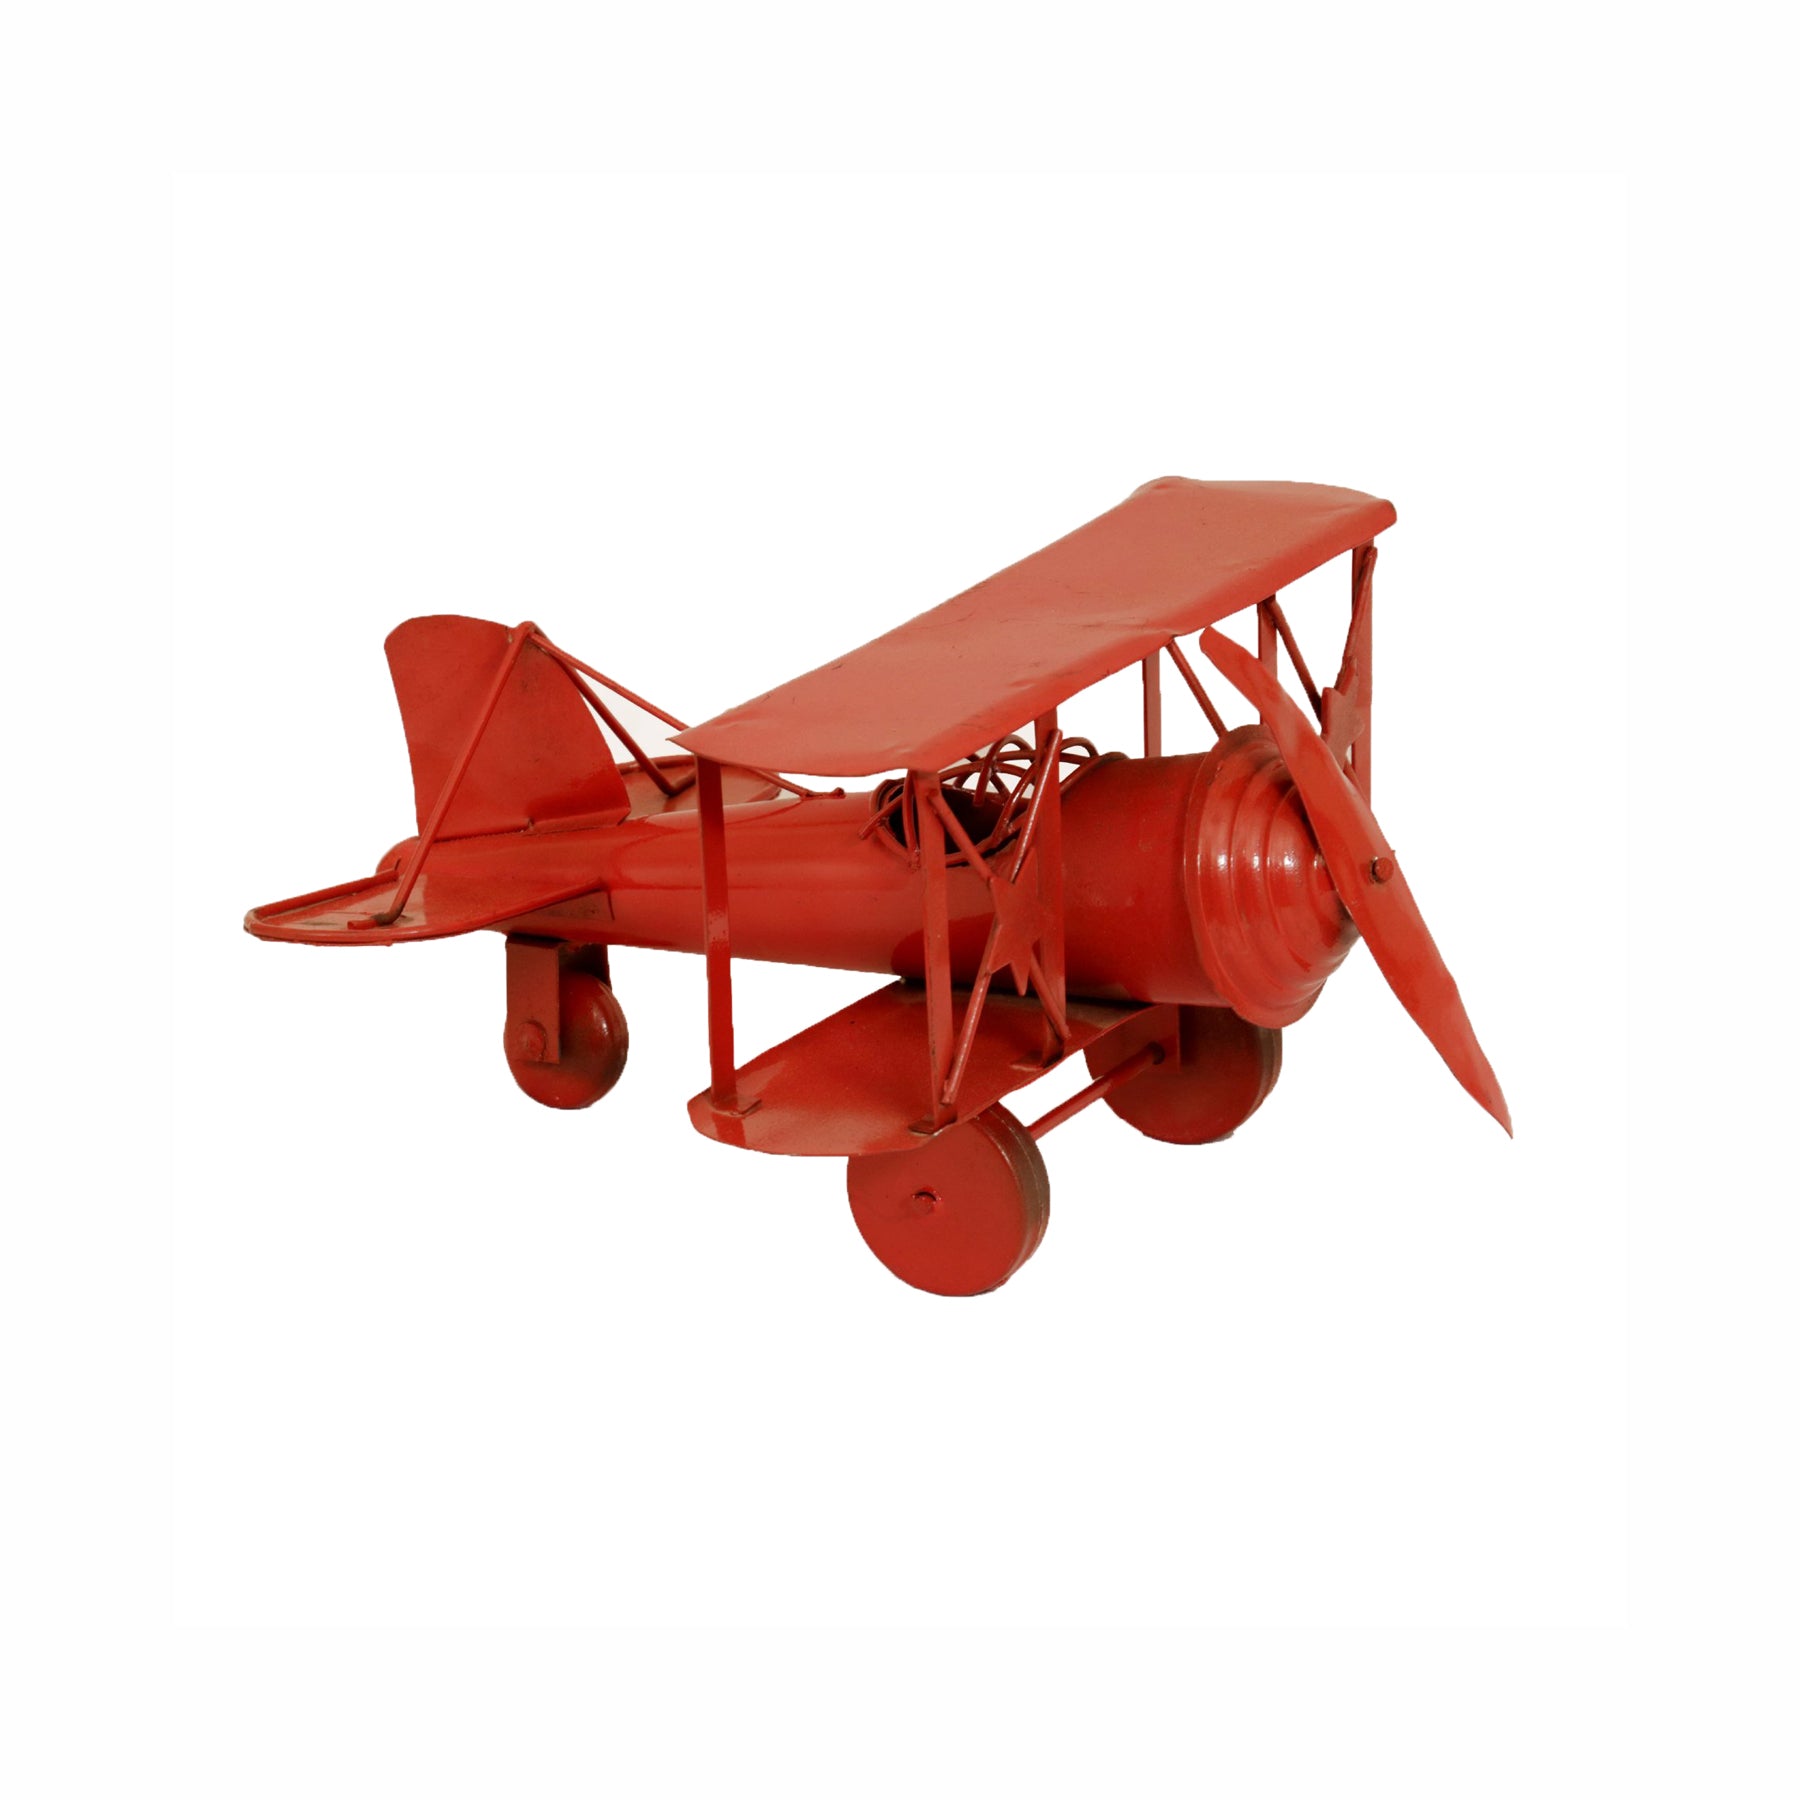 Flaming Red Metal Plane Vehicle figurine